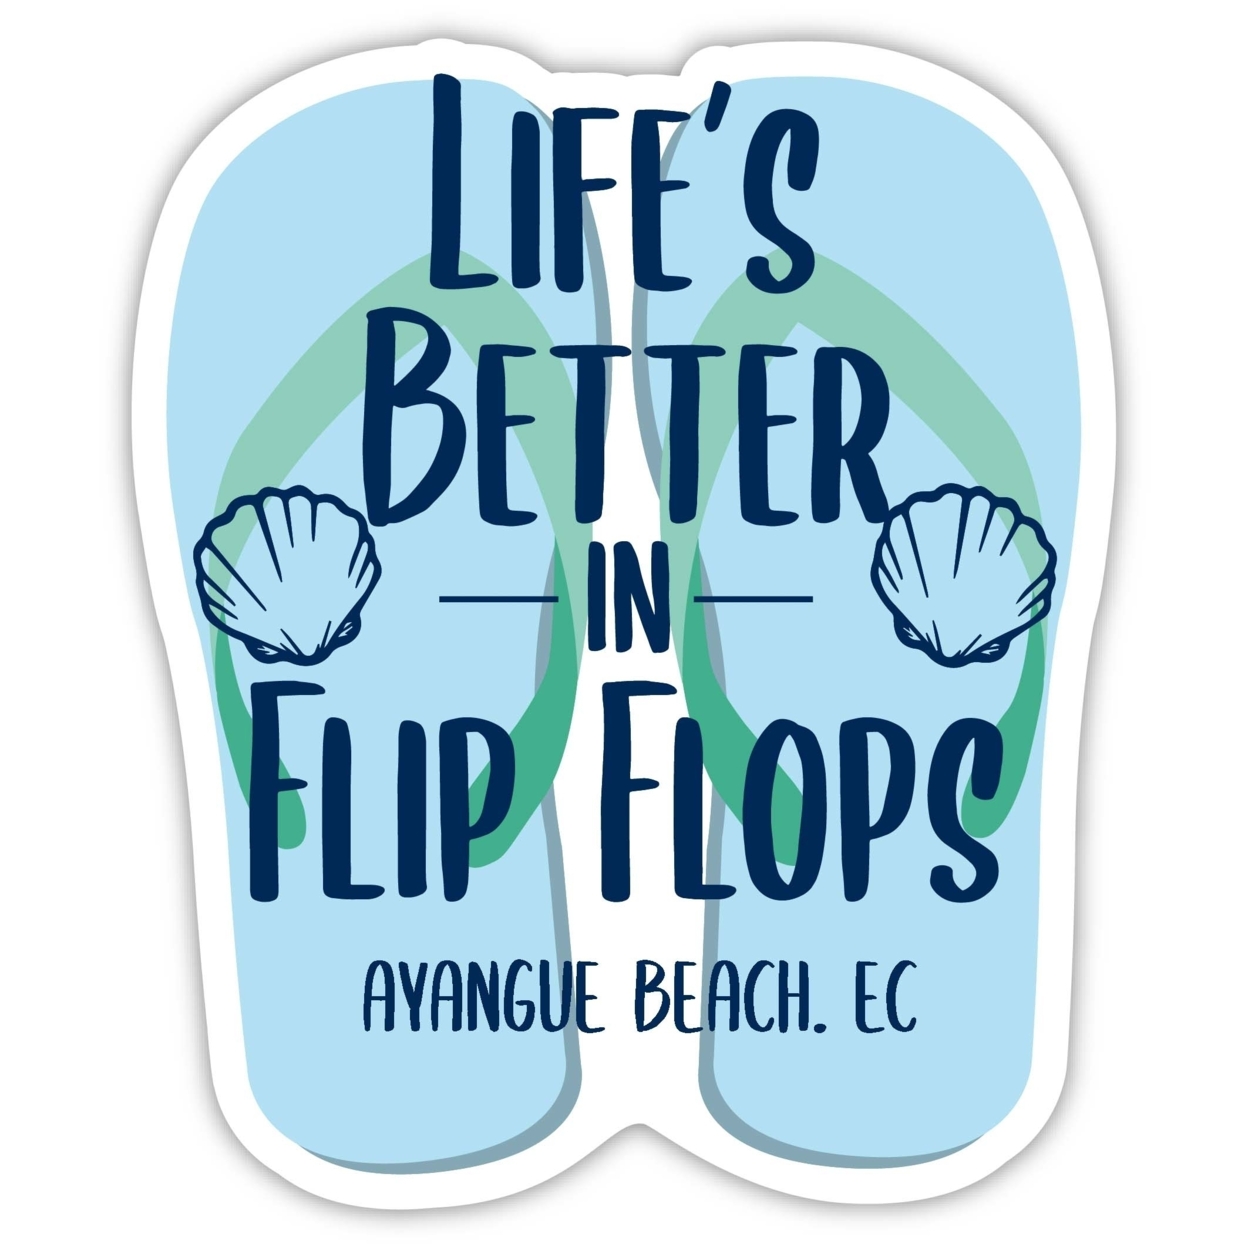 Ayangue Beach Ecuador Souvenir 4 Inch Vinyl Decal Sticker Flip Flop Design